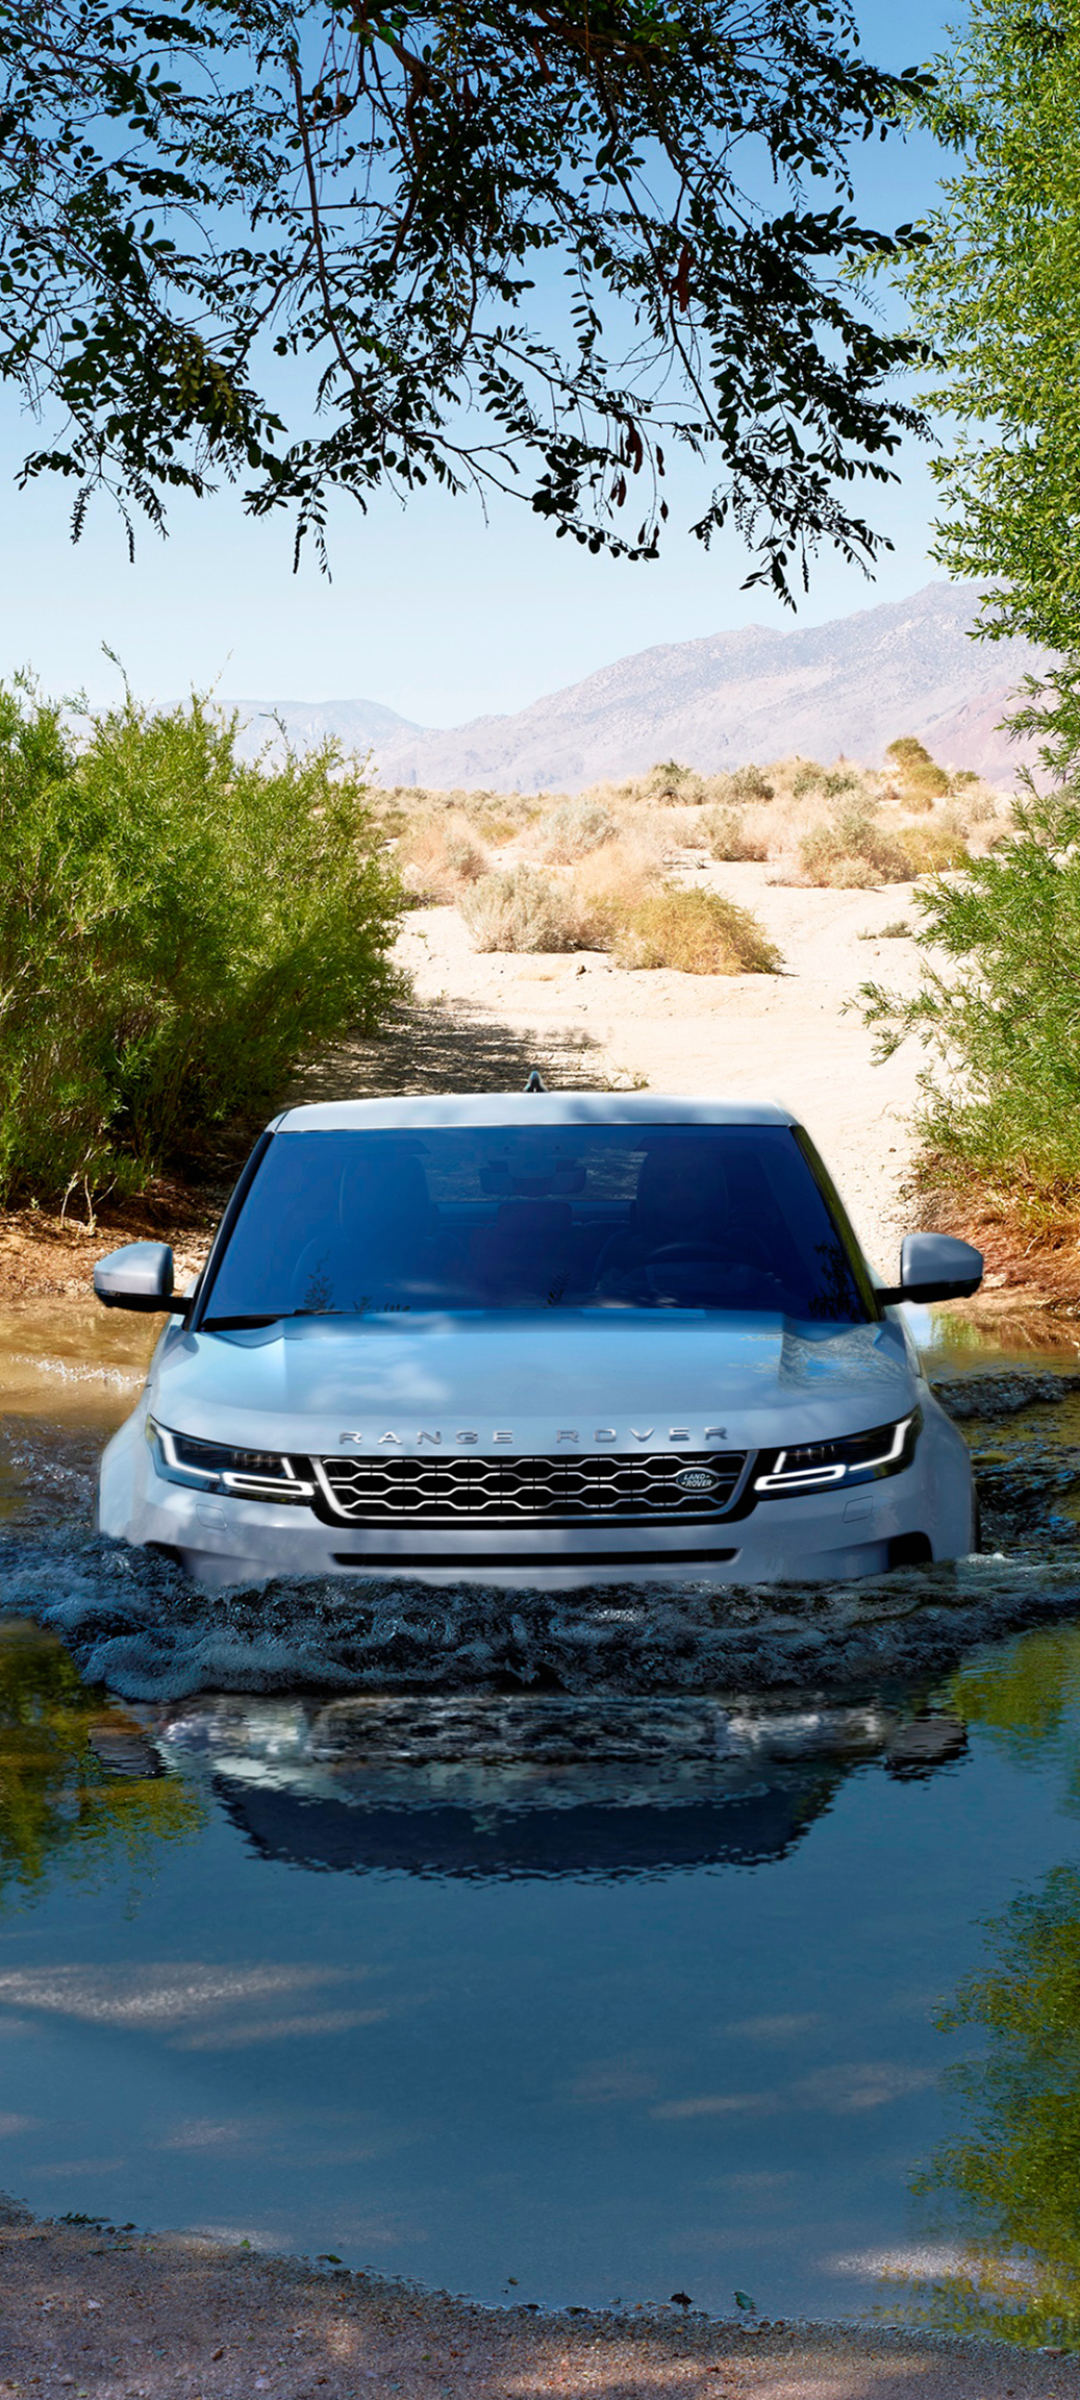 Скачати мобільні шпалери Range Rover, Транспортні Засоби, Range Rover Evoque безкоштовно.